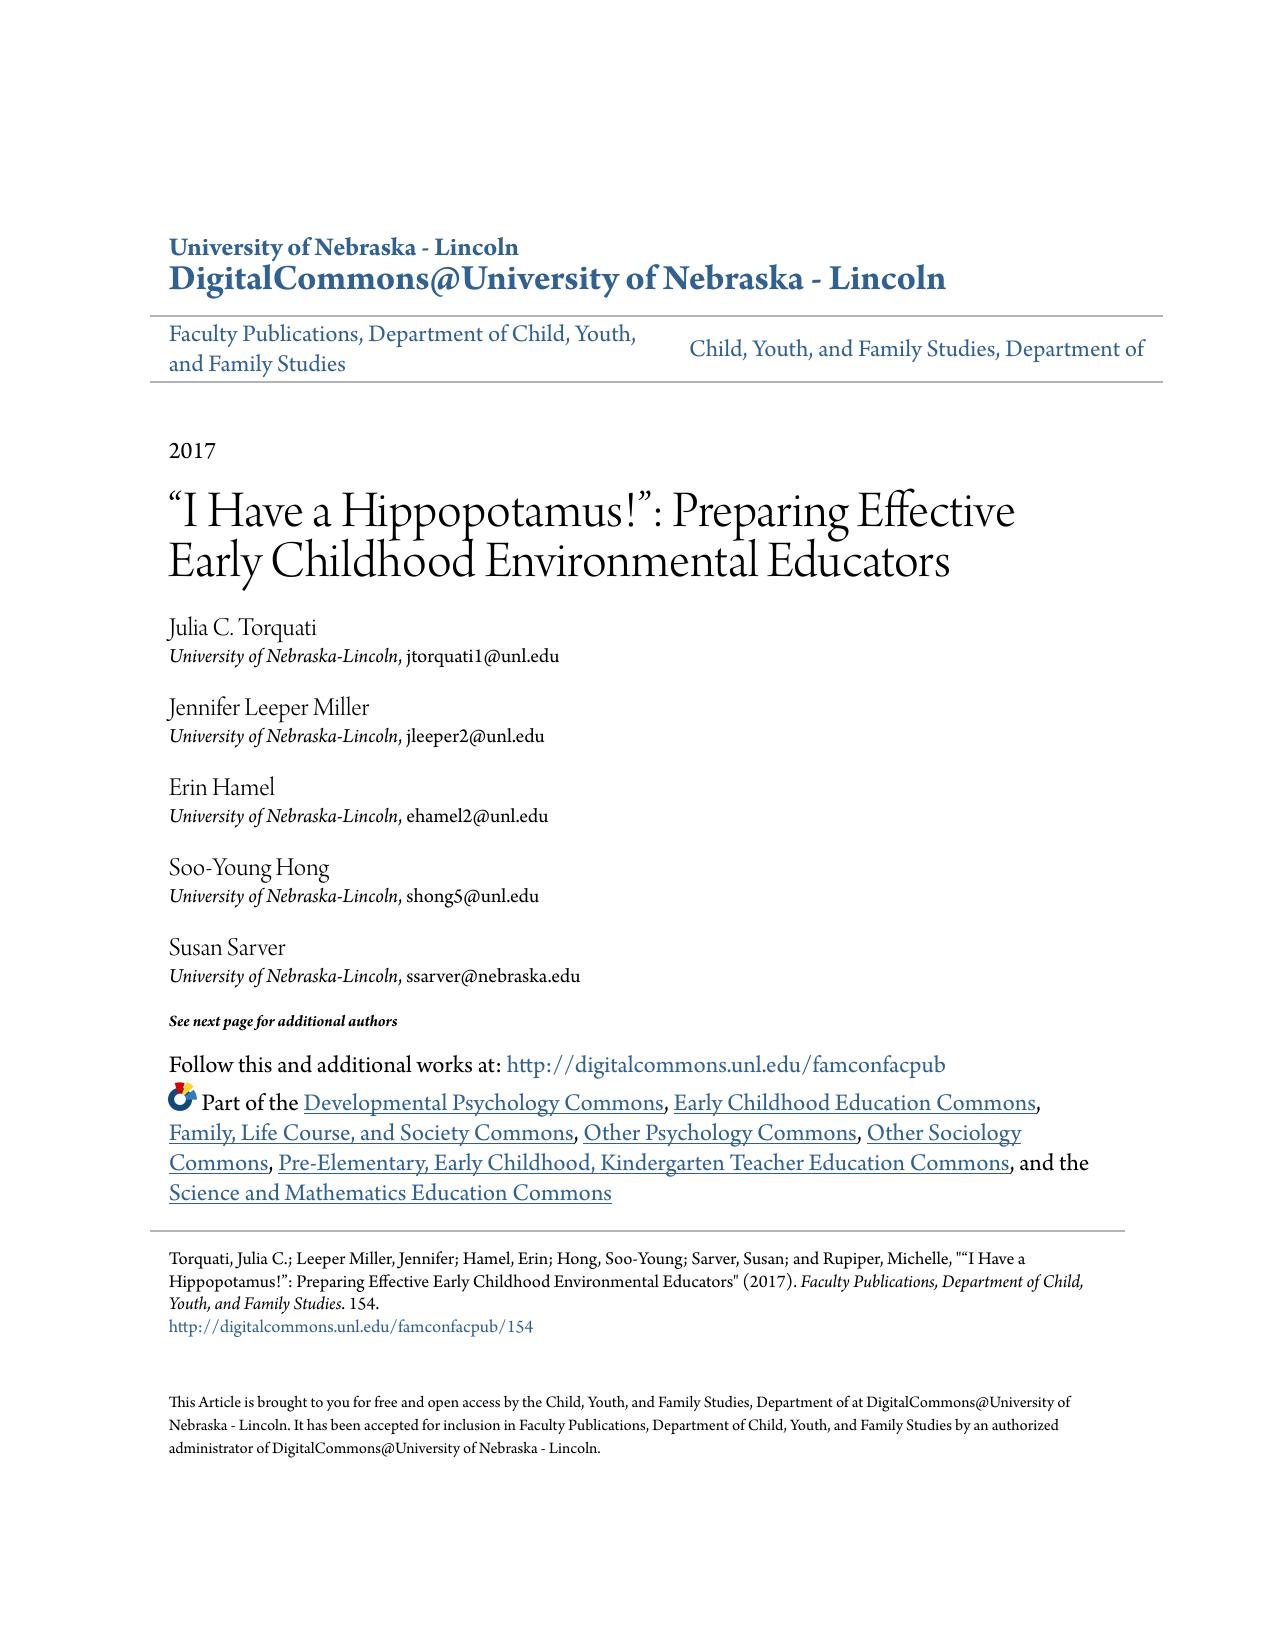 â•œI Have a Hippopotamus!â•š: Preparing Effective Early Childhood Environmental Educators